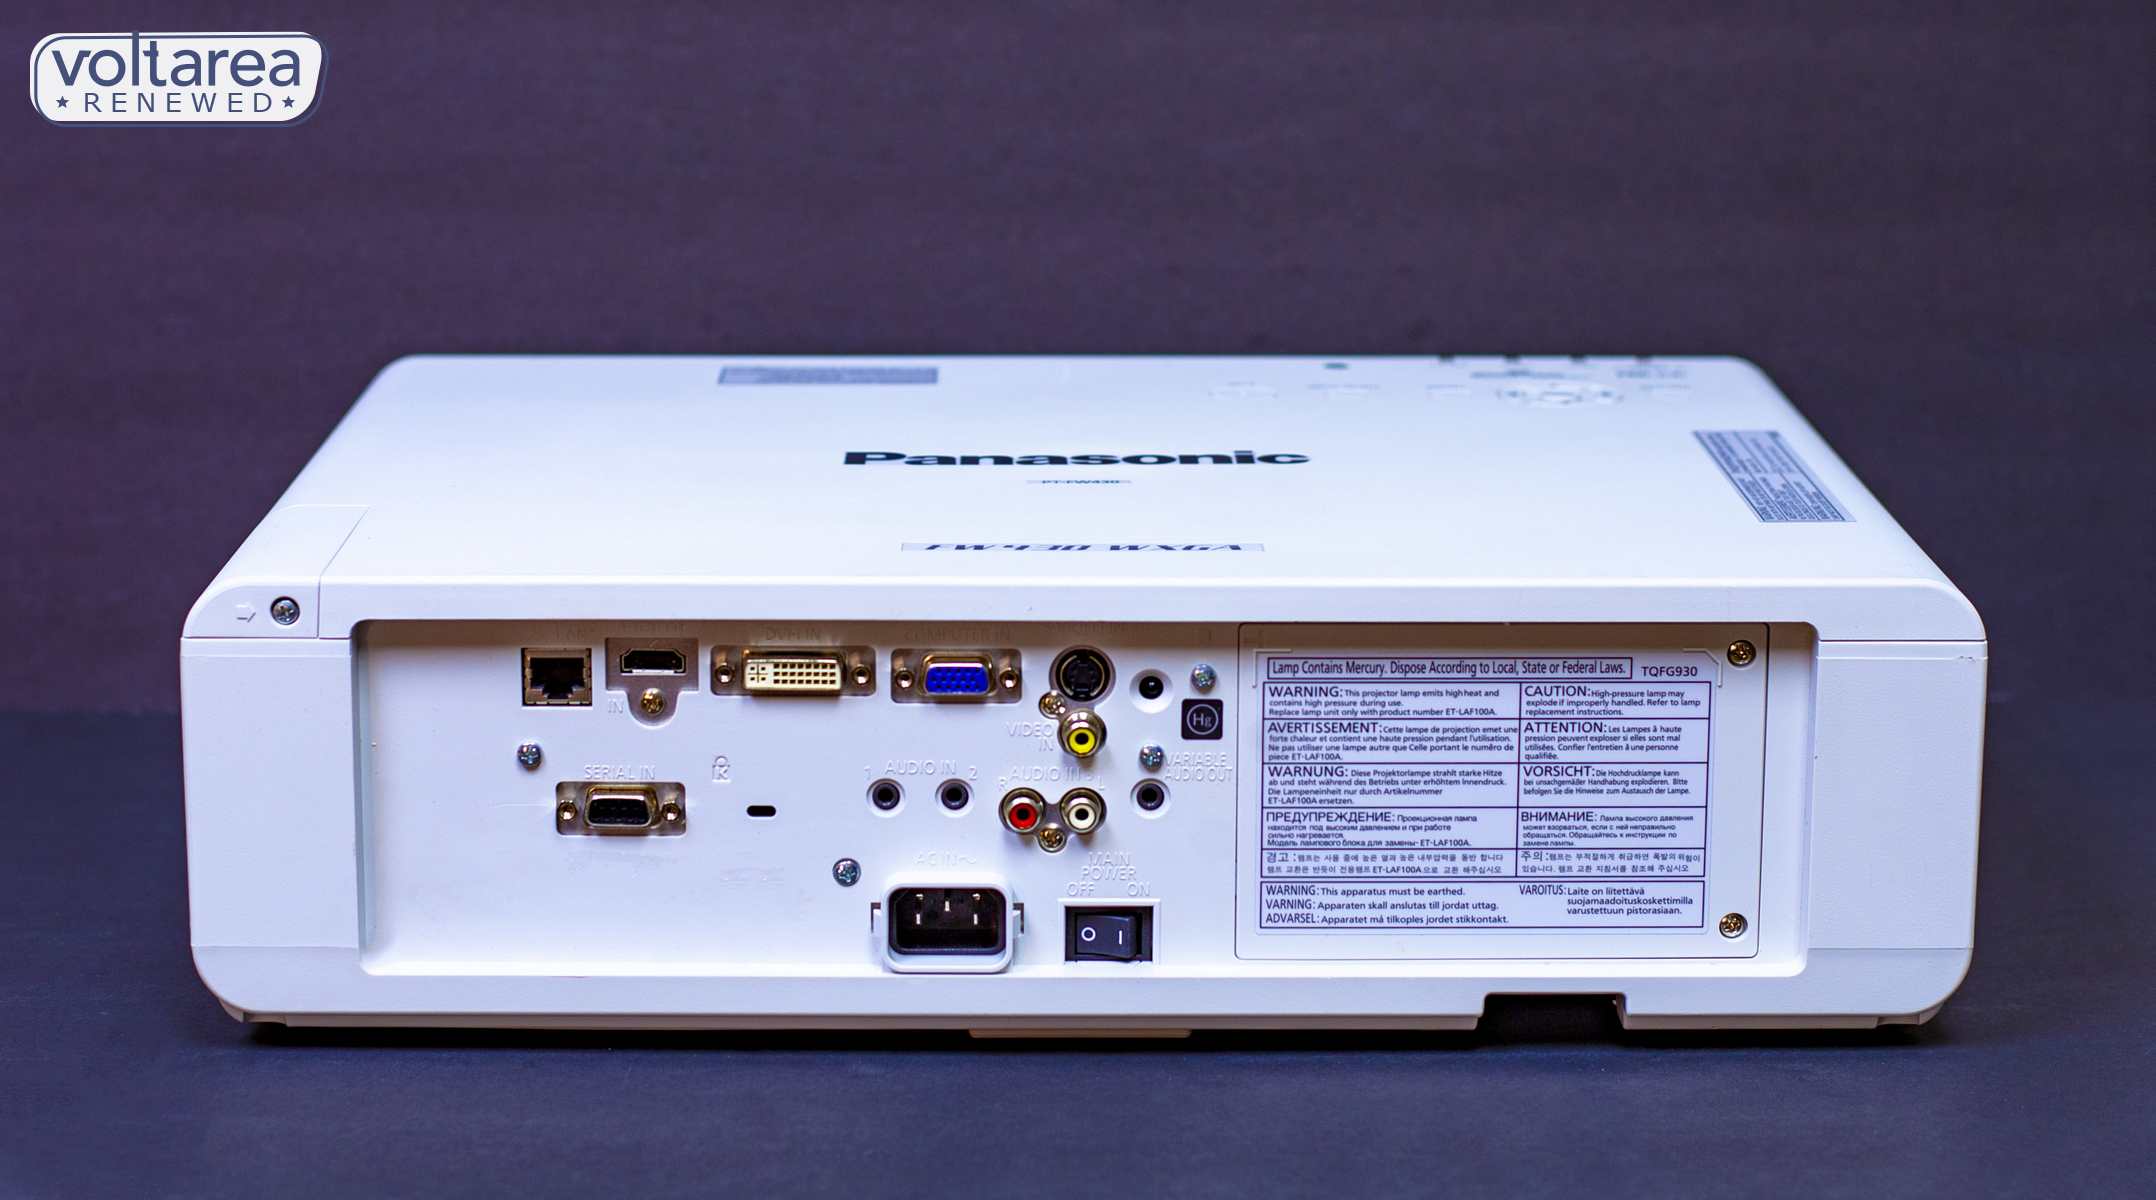 Panasonic PT-FW430U Projector RECONDITIONED